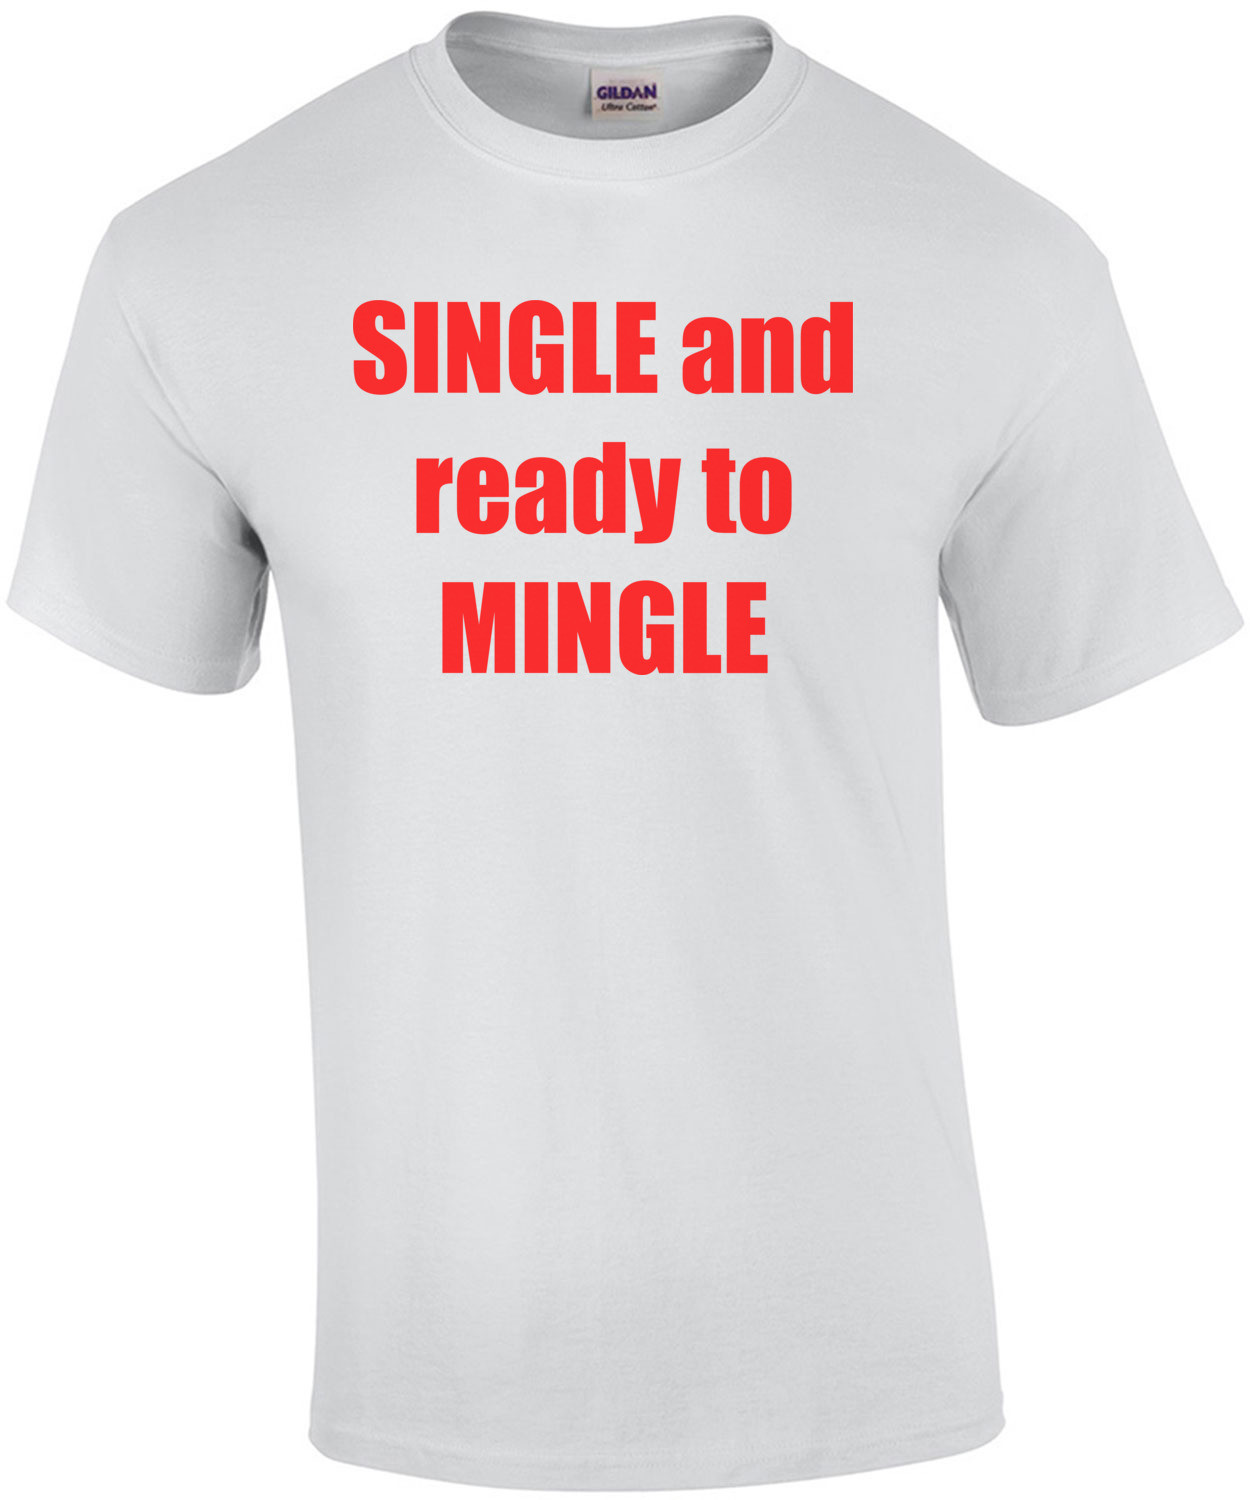 Single and ready to mingle Shirt